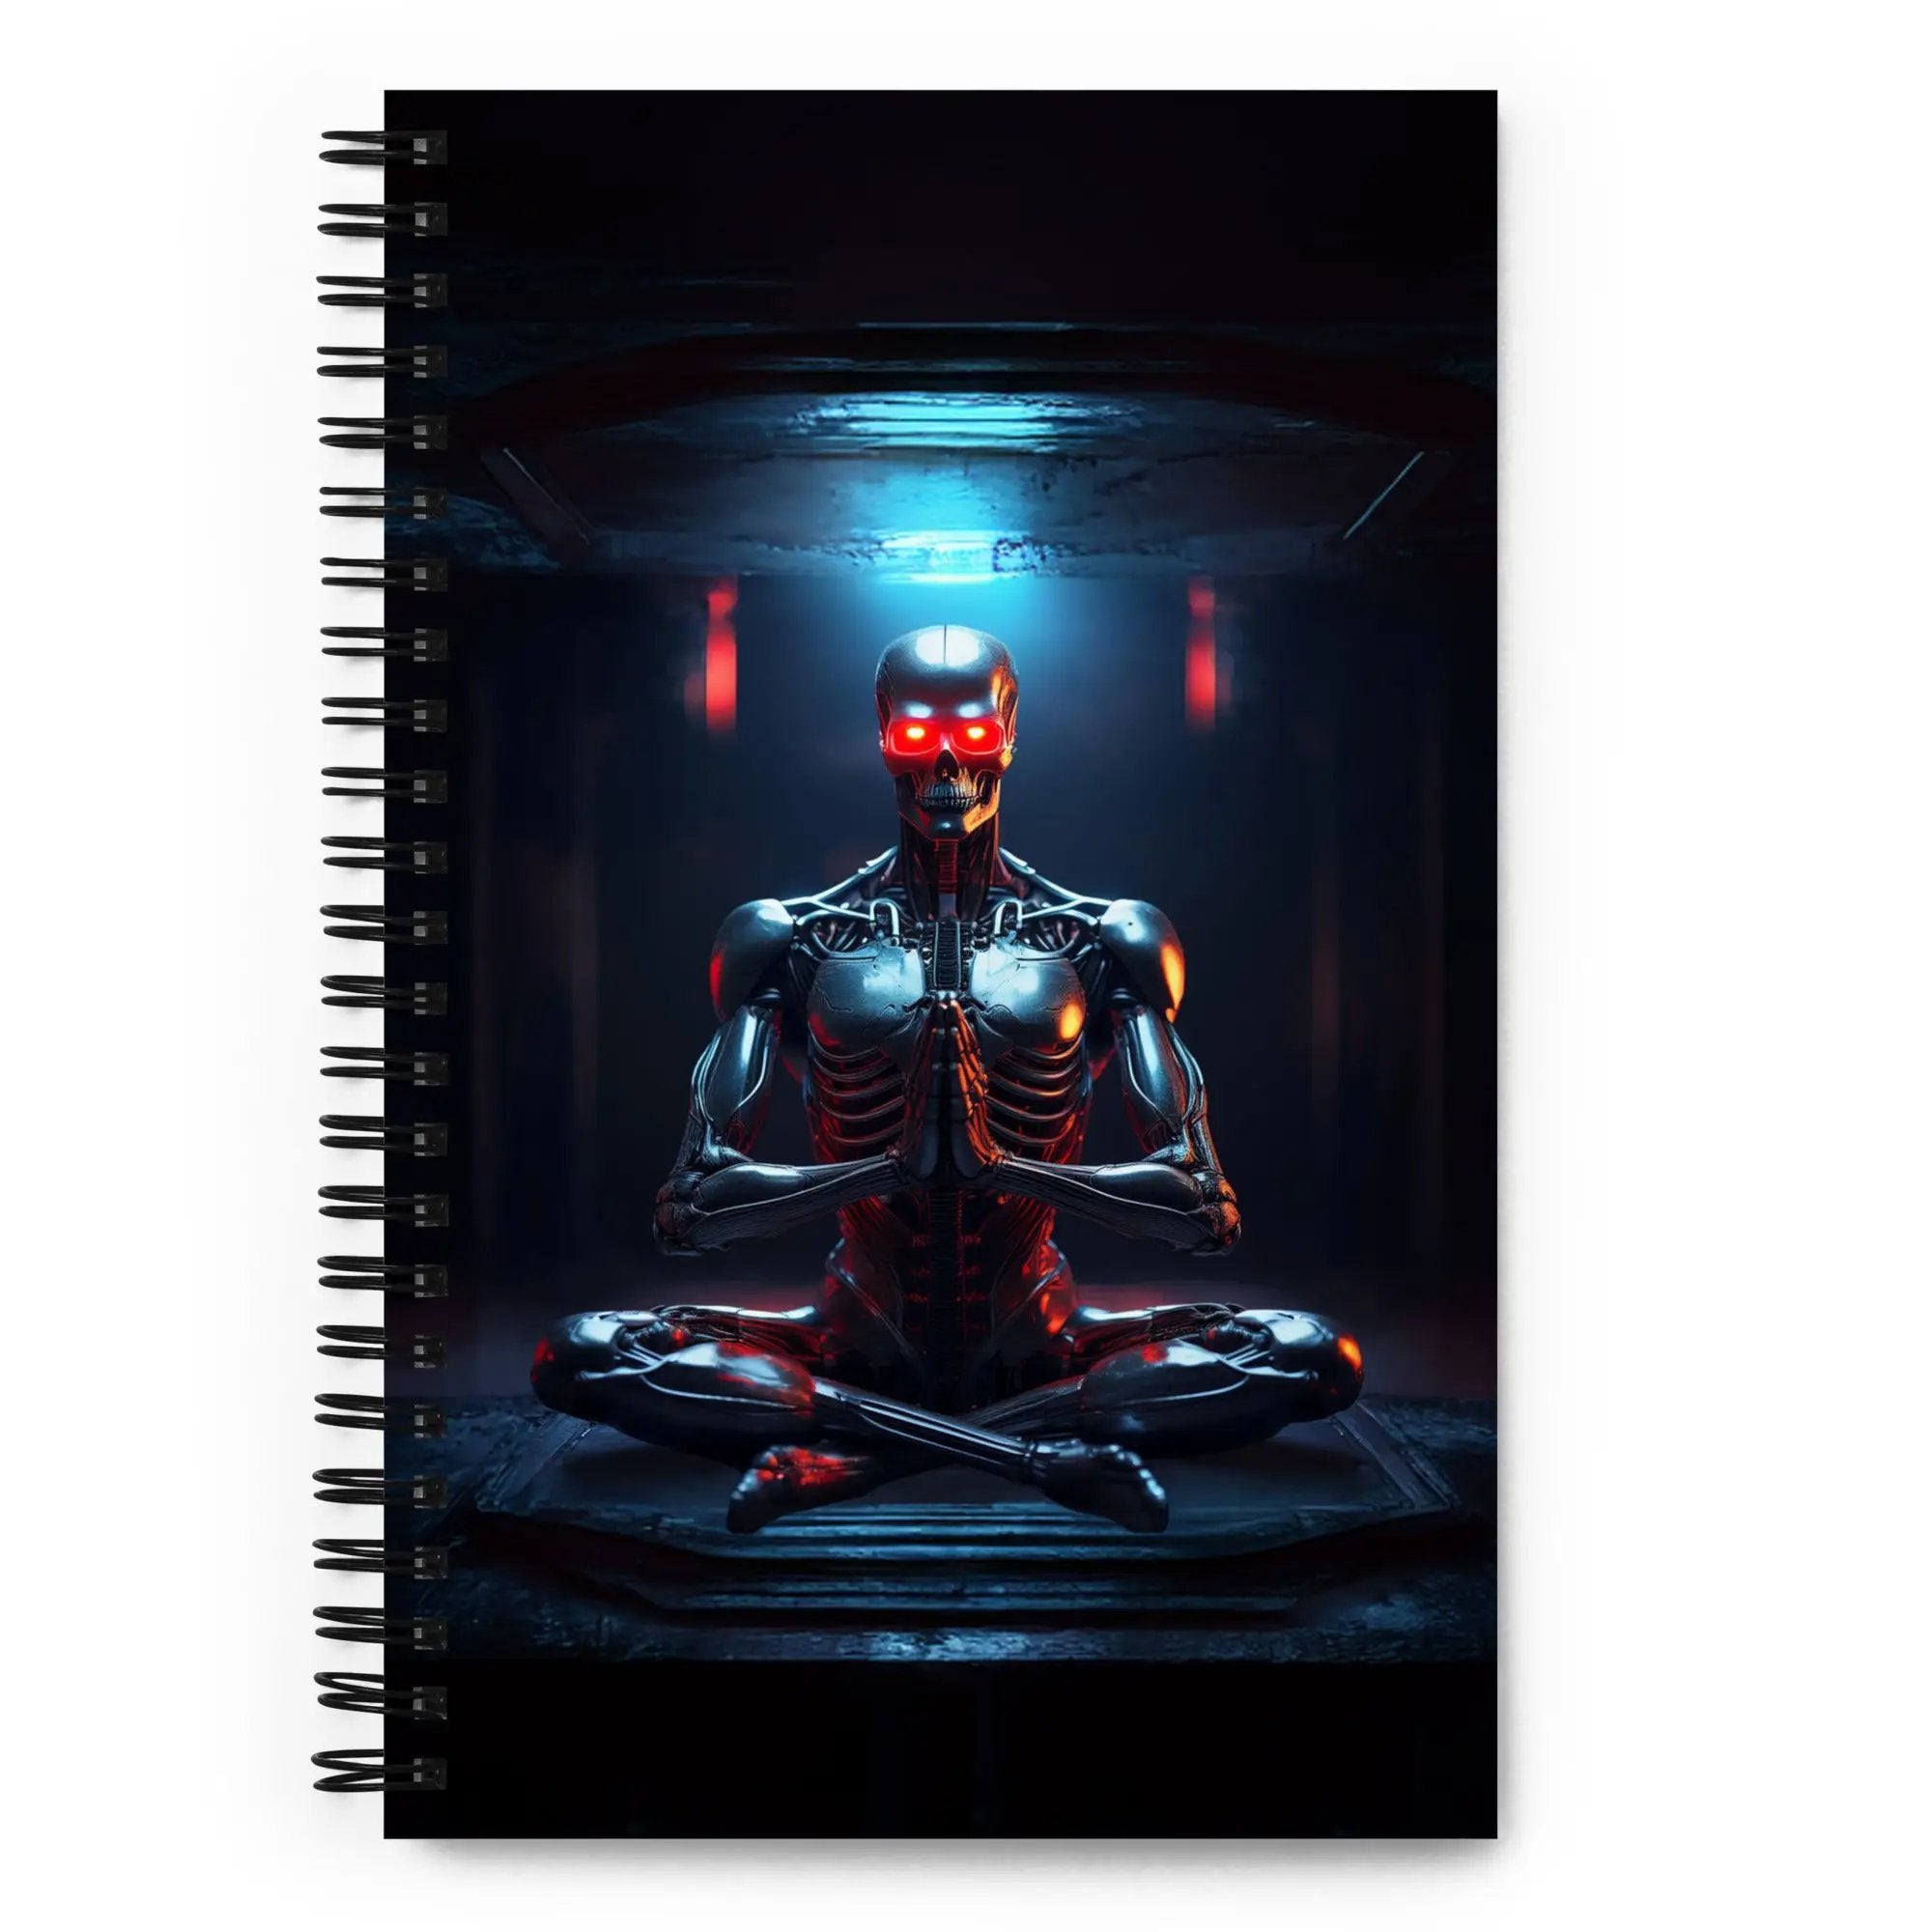 Terminator Buddha Spiral notebook